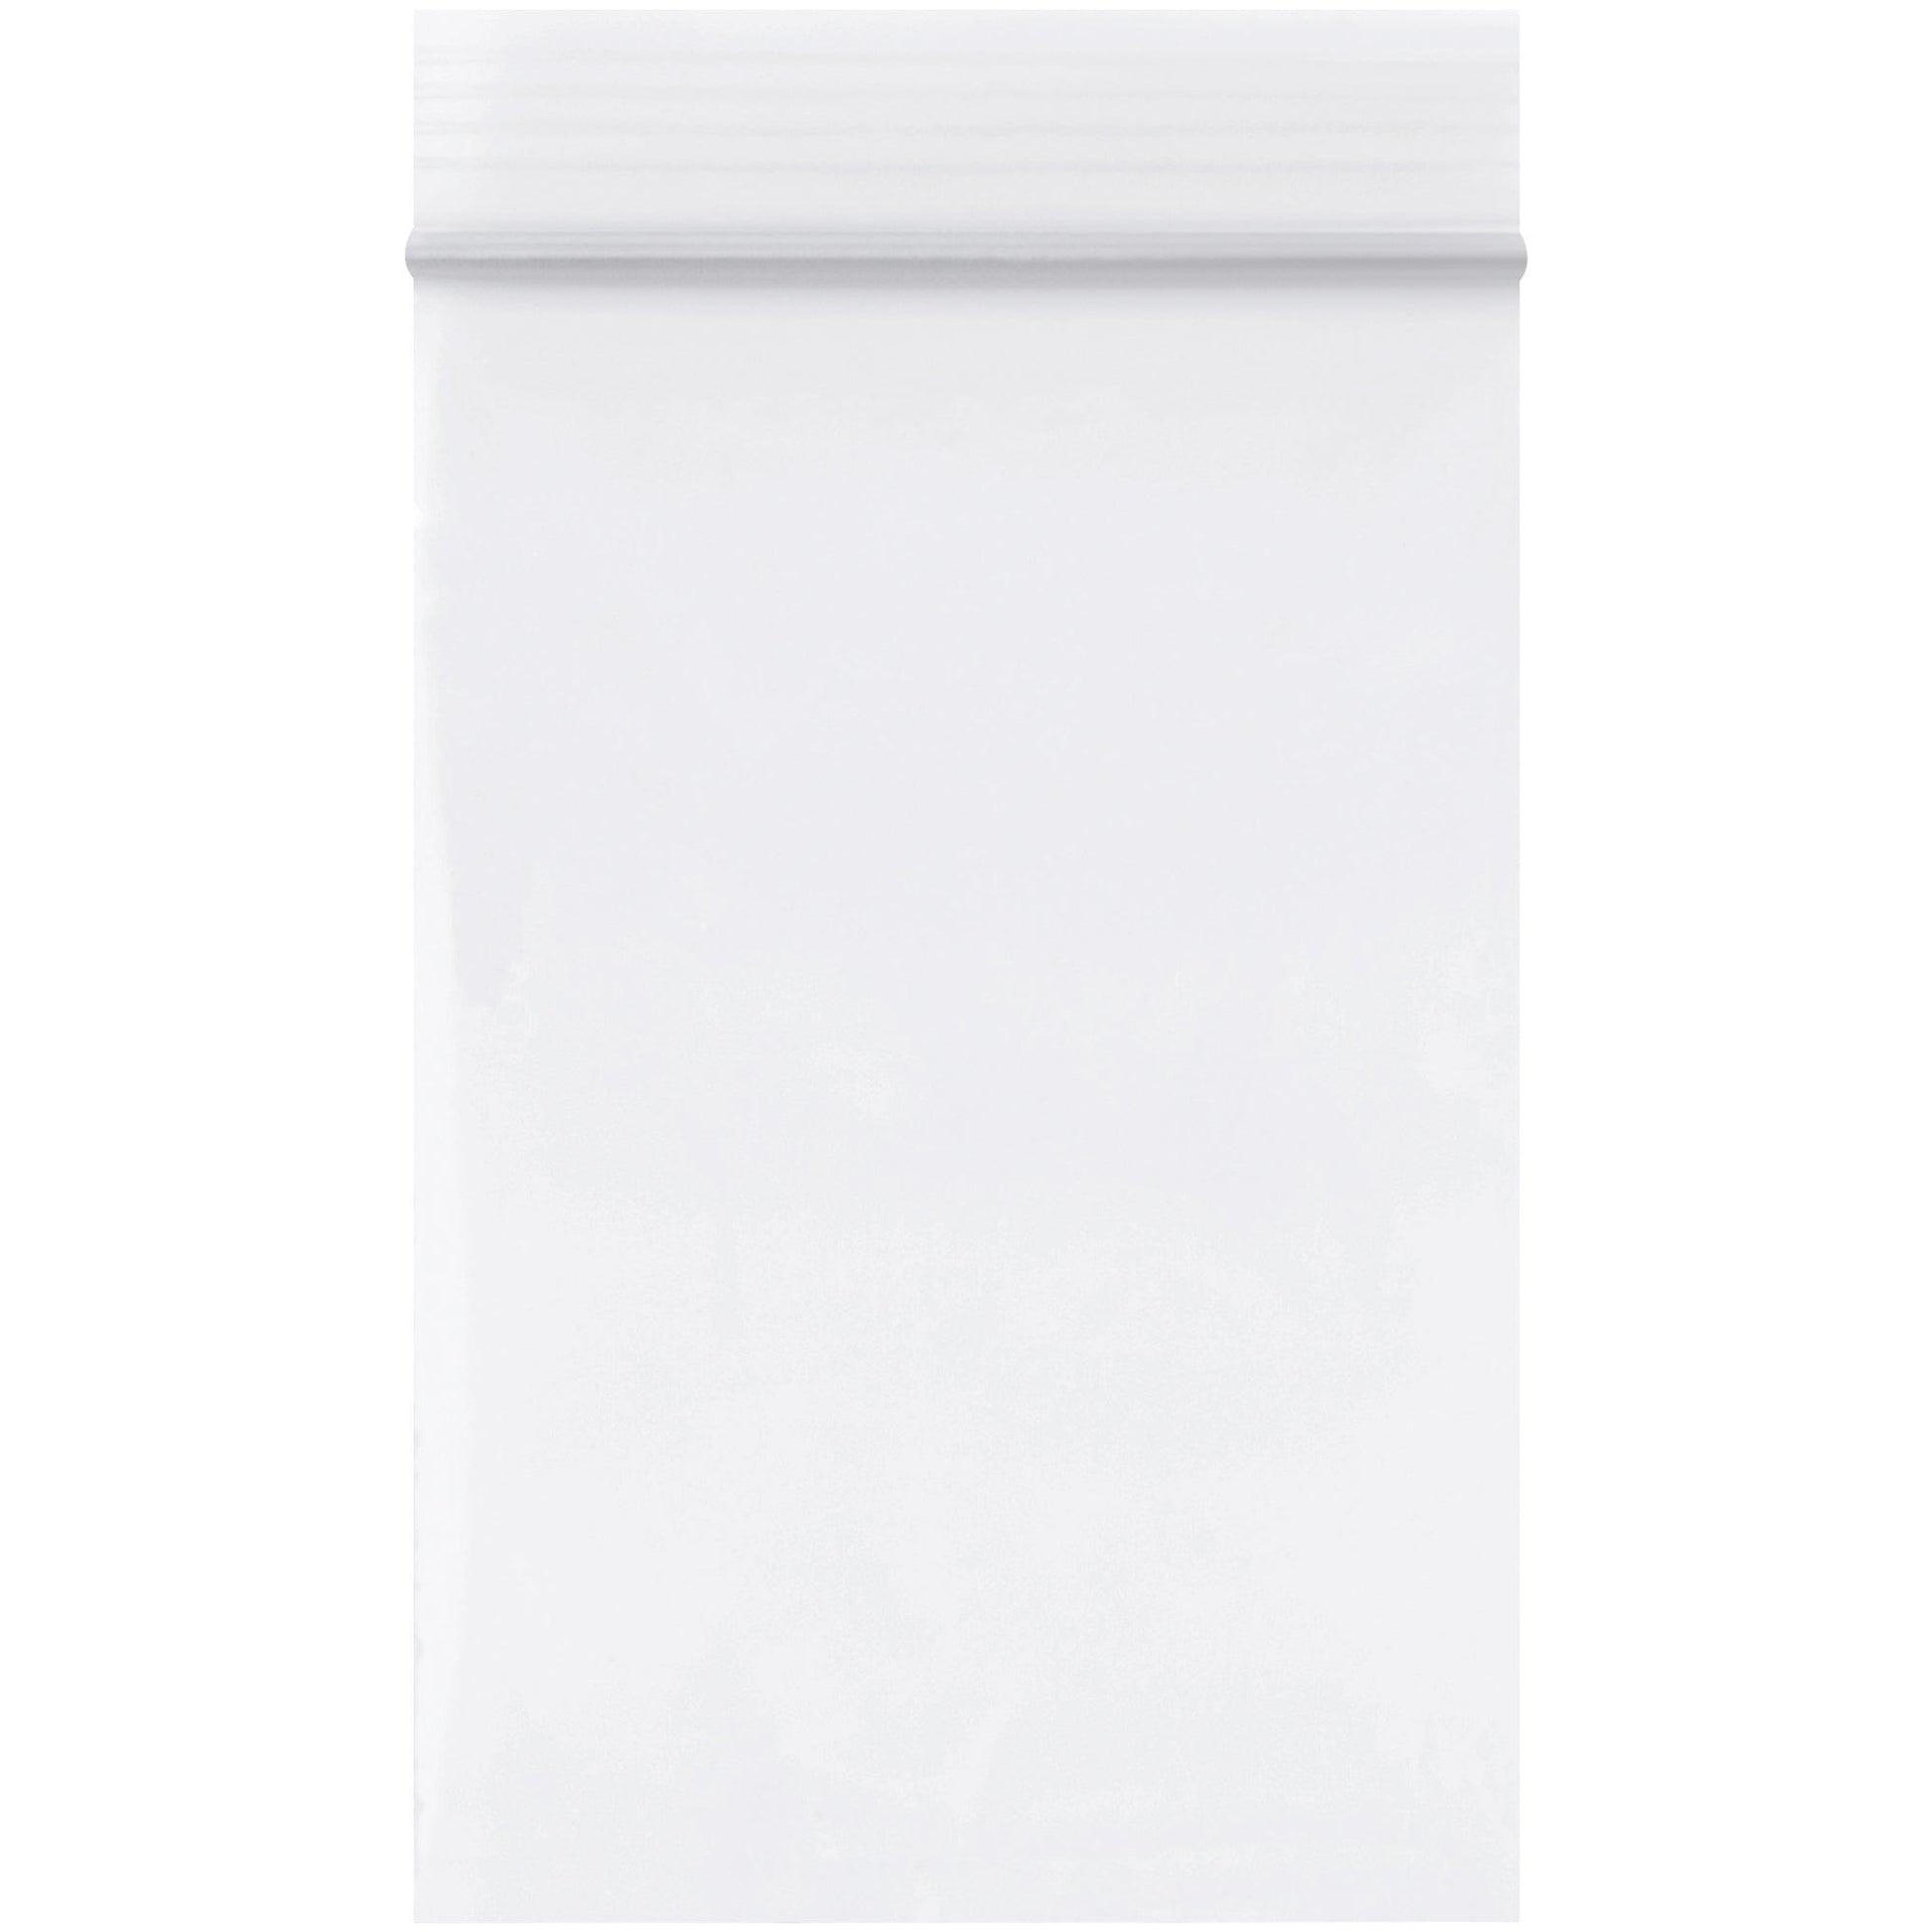 2 x 3" - 2 Mil White Reclosable Poly Bags - PB3525W